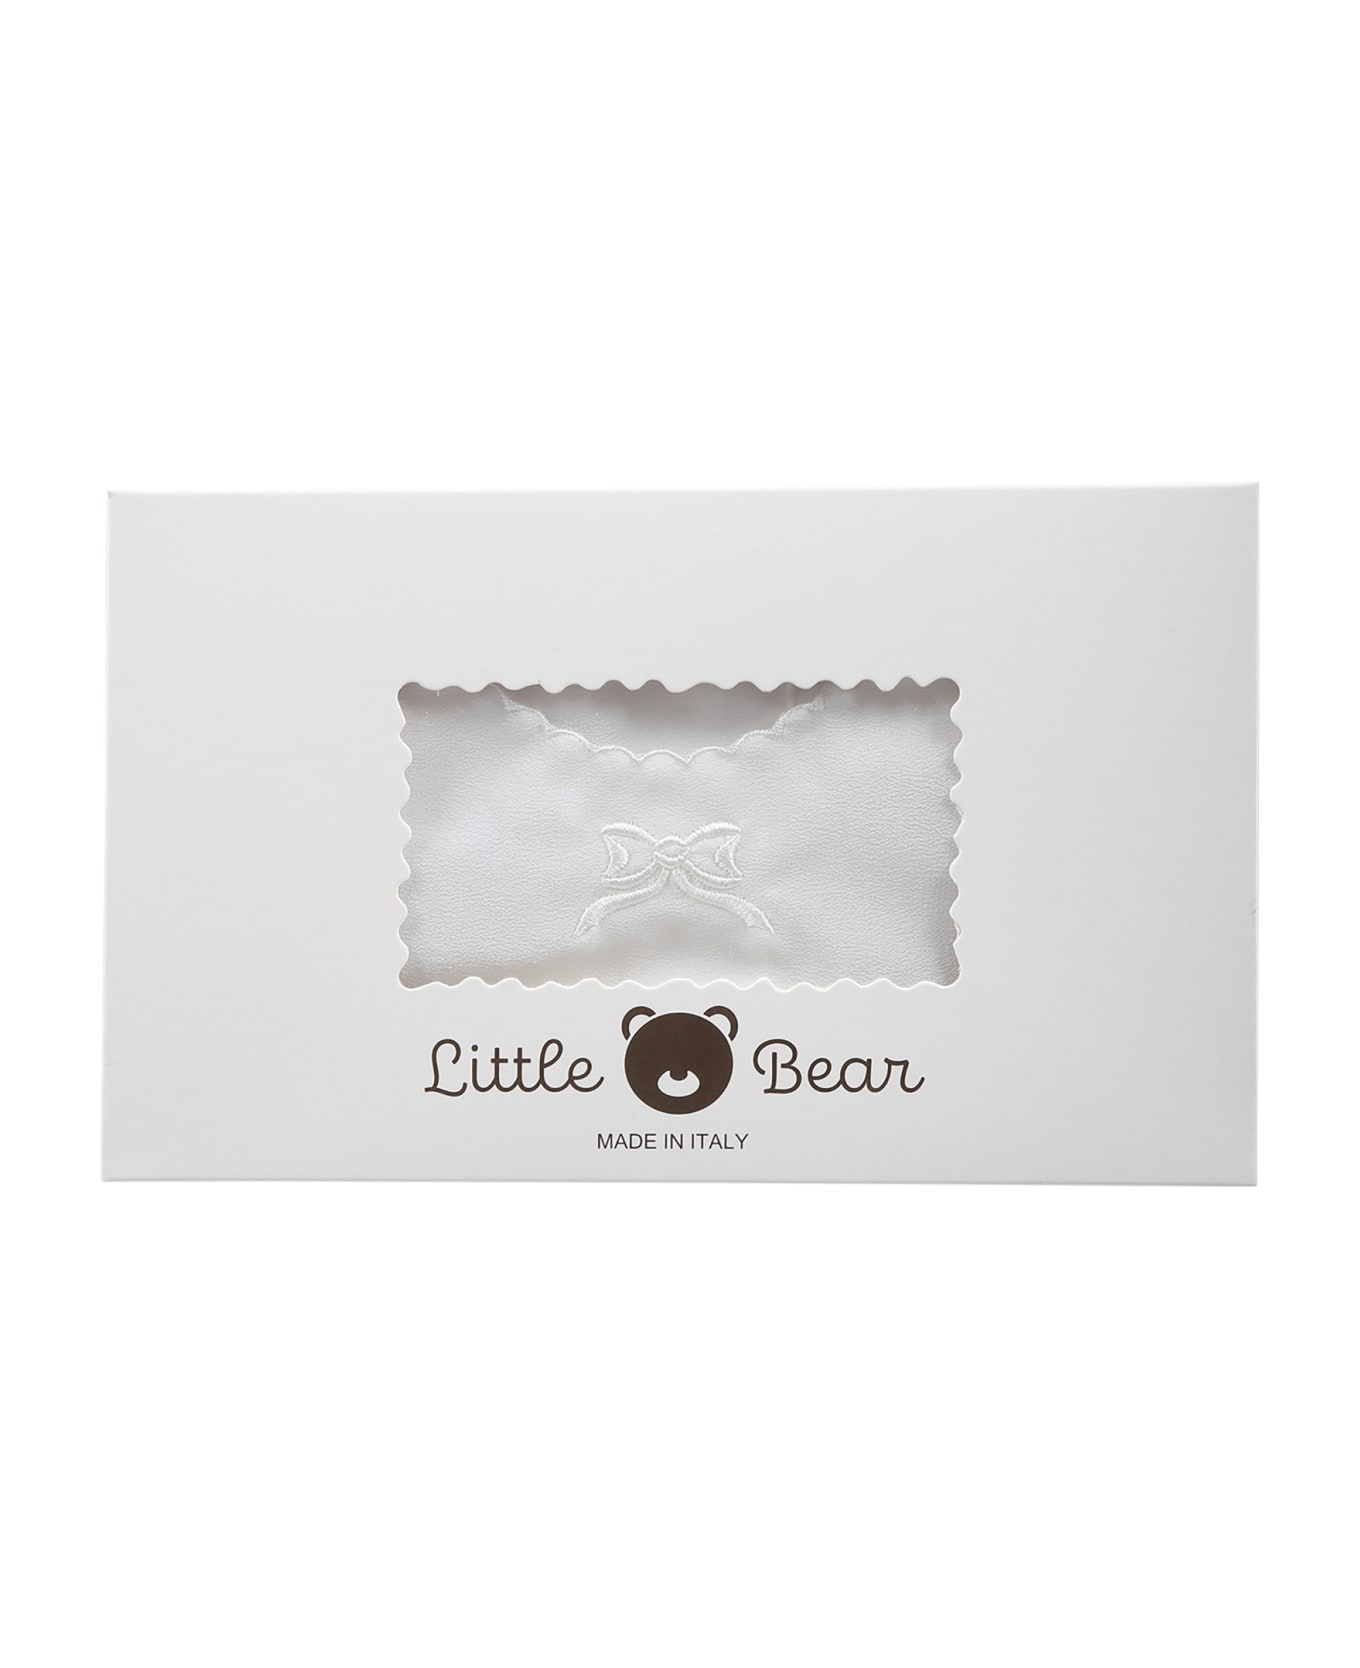 Little Bear Ivory Good-luck Newborn Shirt With Bow For Babykids - Ivory シャツ